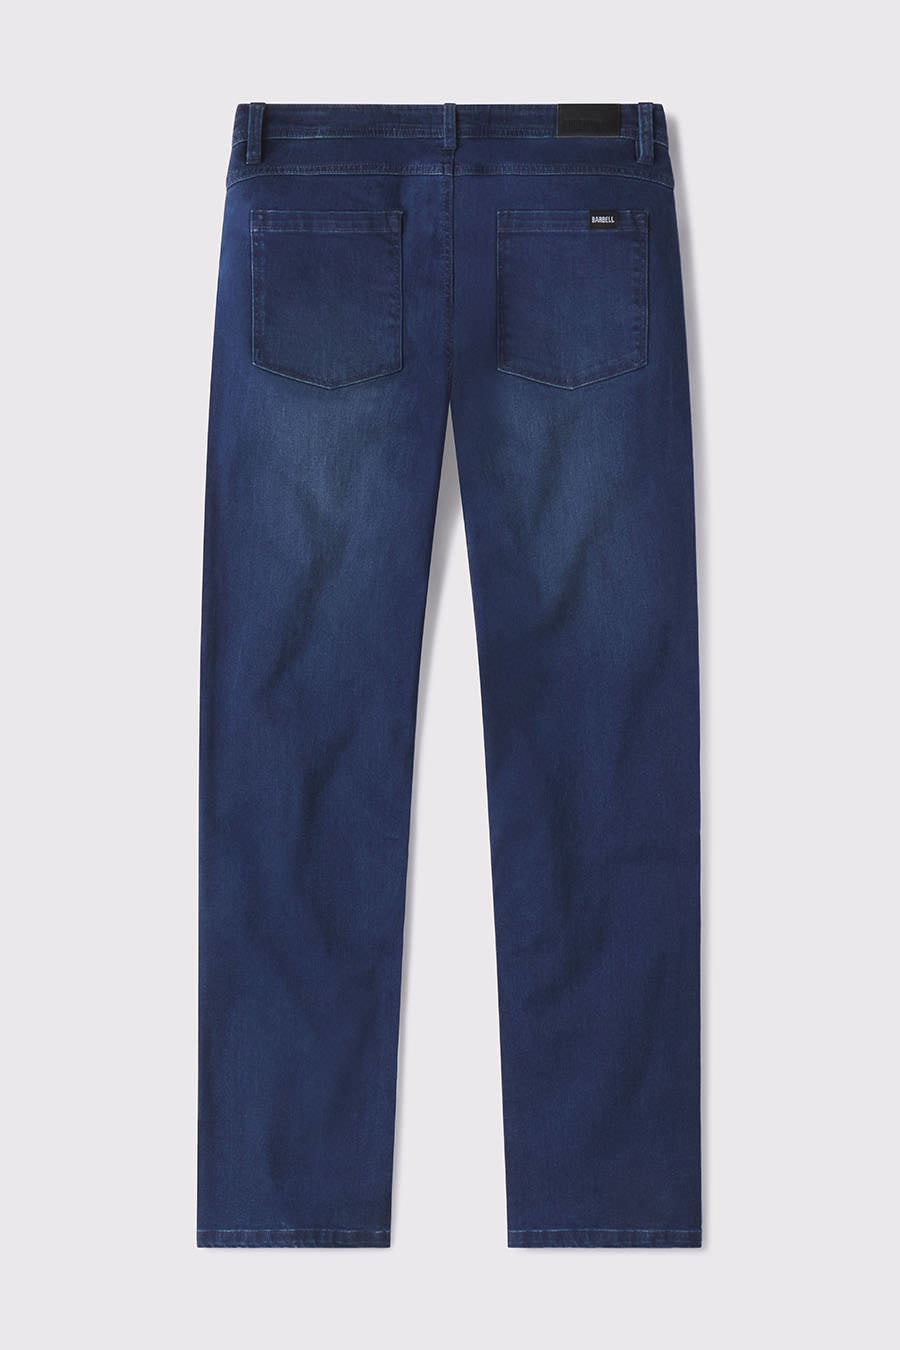 Barbell Apparel Men's Slim Athletic Fit Jeans Dark Distressed 34